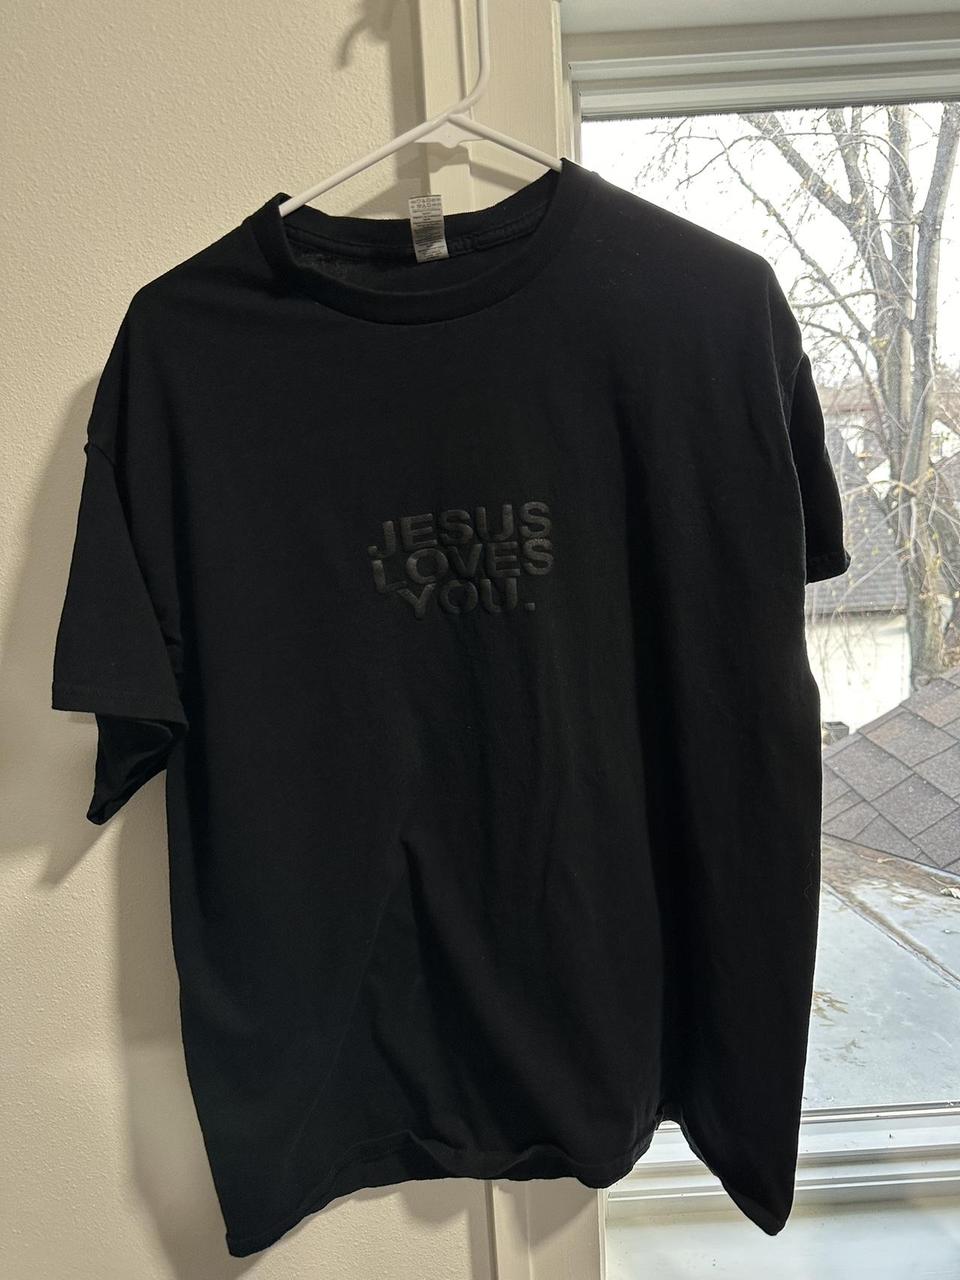 JESUS LOVES YOU Bundle. Tan and black shirt both XL - Depop